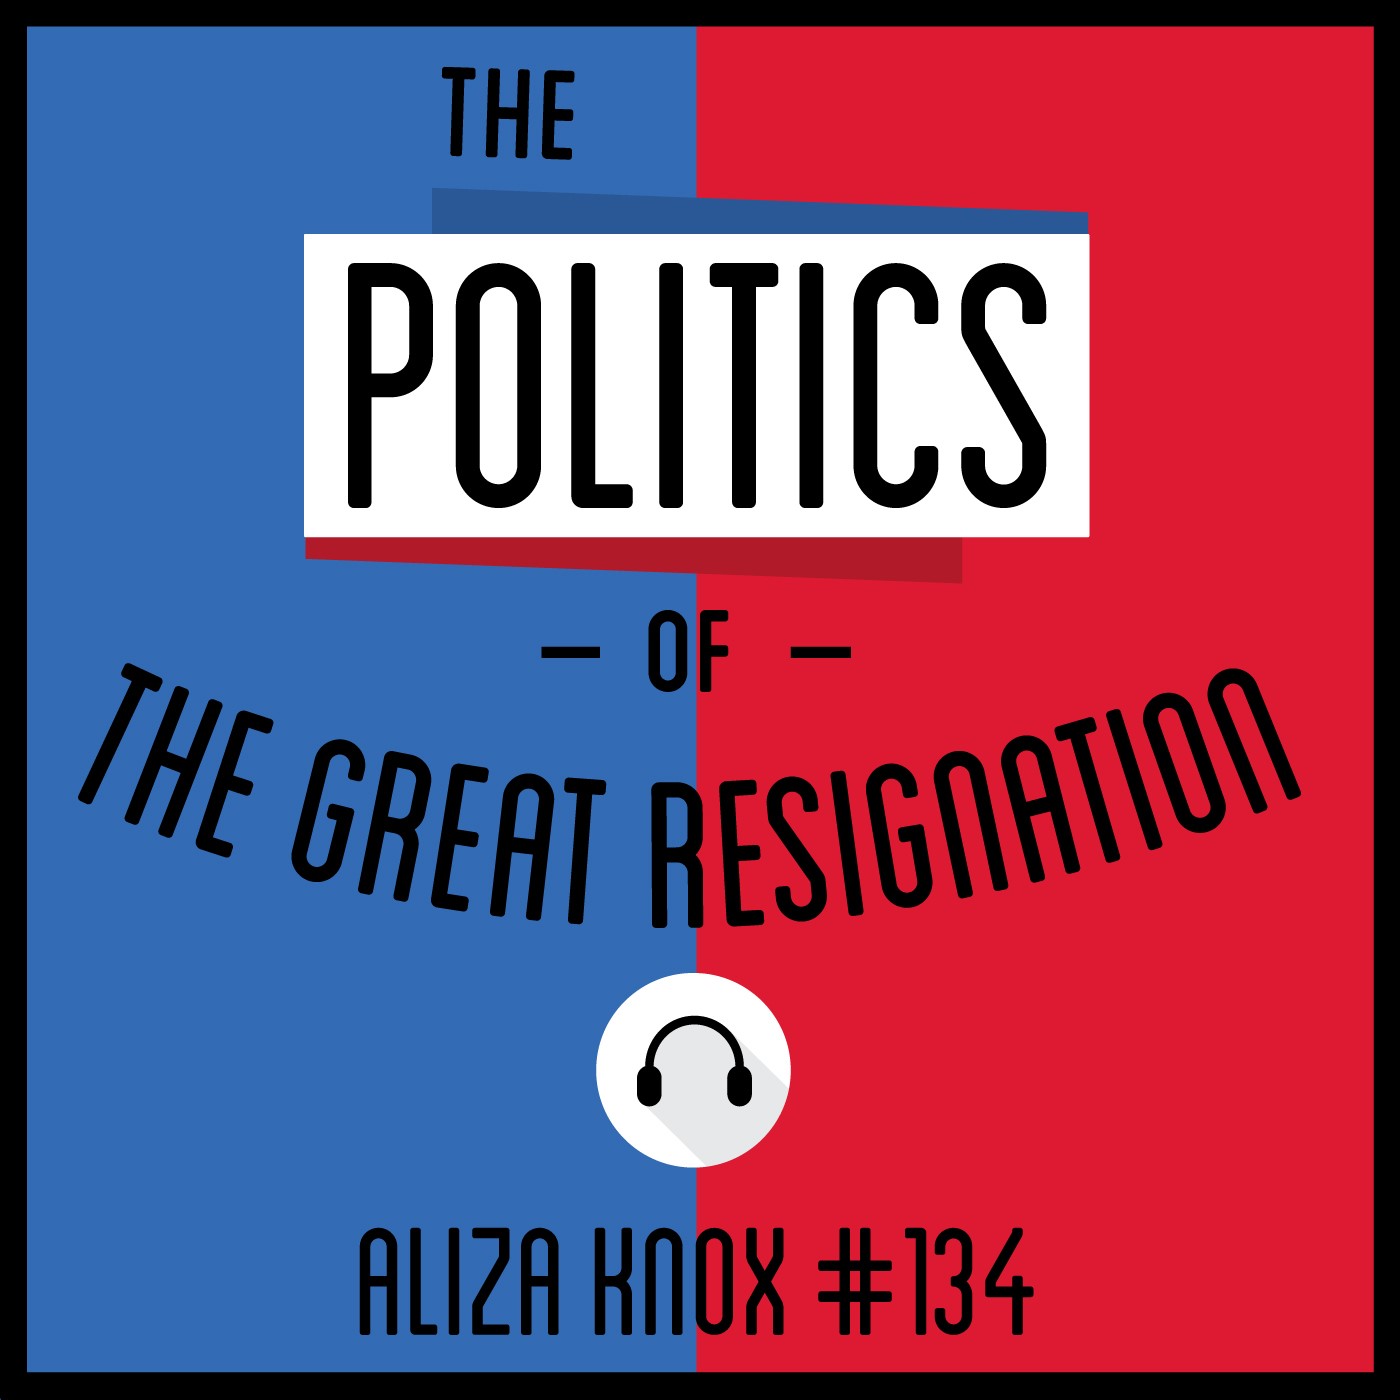 134: The Politics of the Great Resignation - Aliza Knox